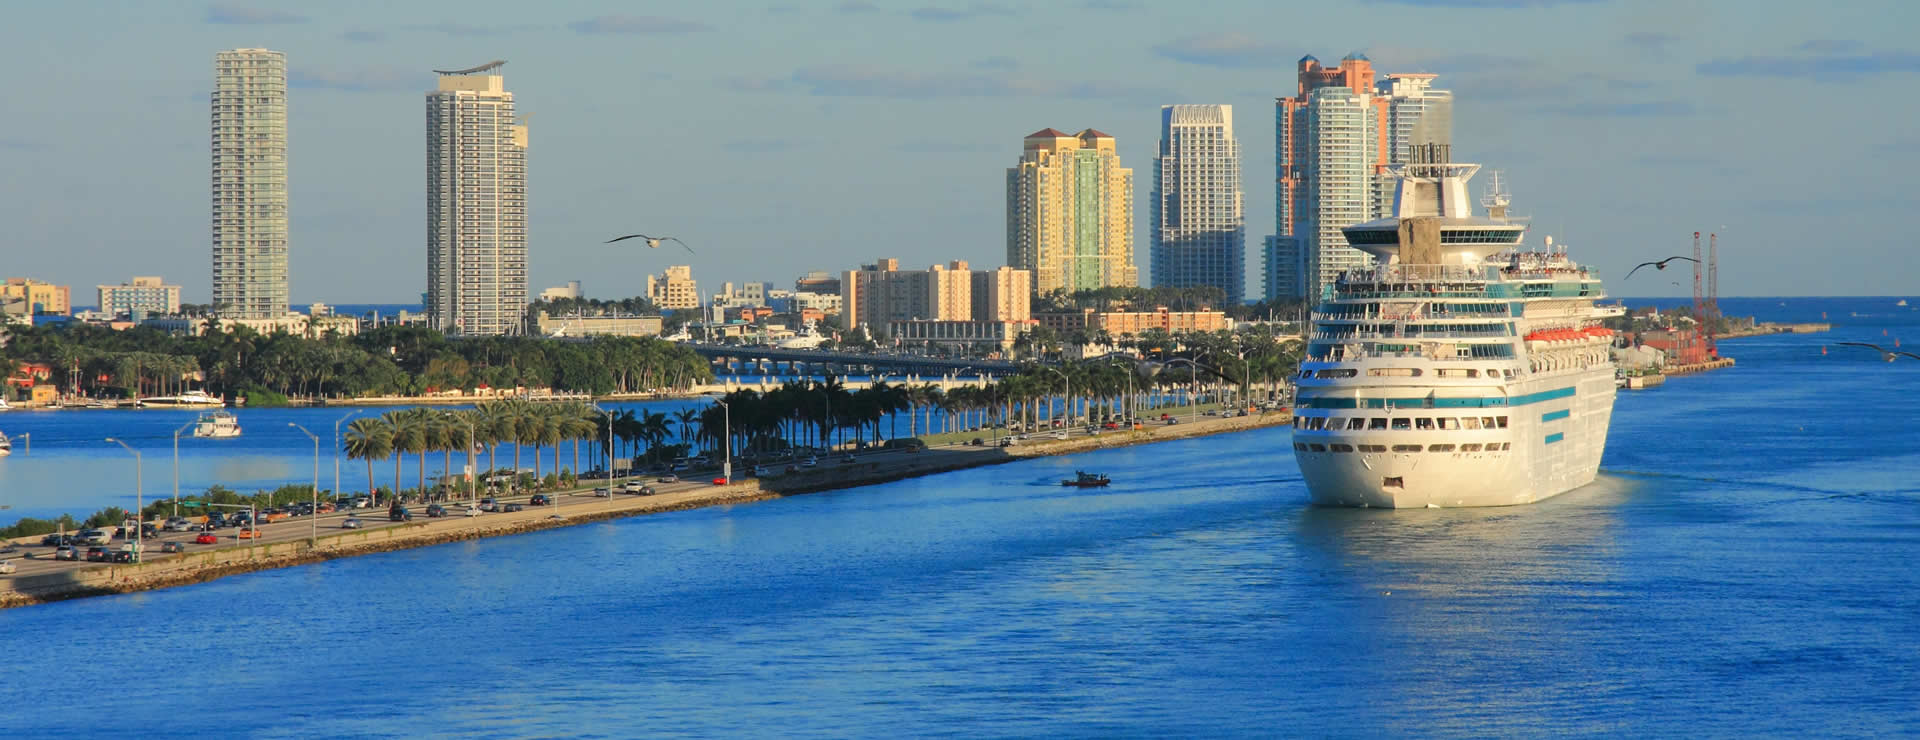 Cruise ship leaving Port of Miami